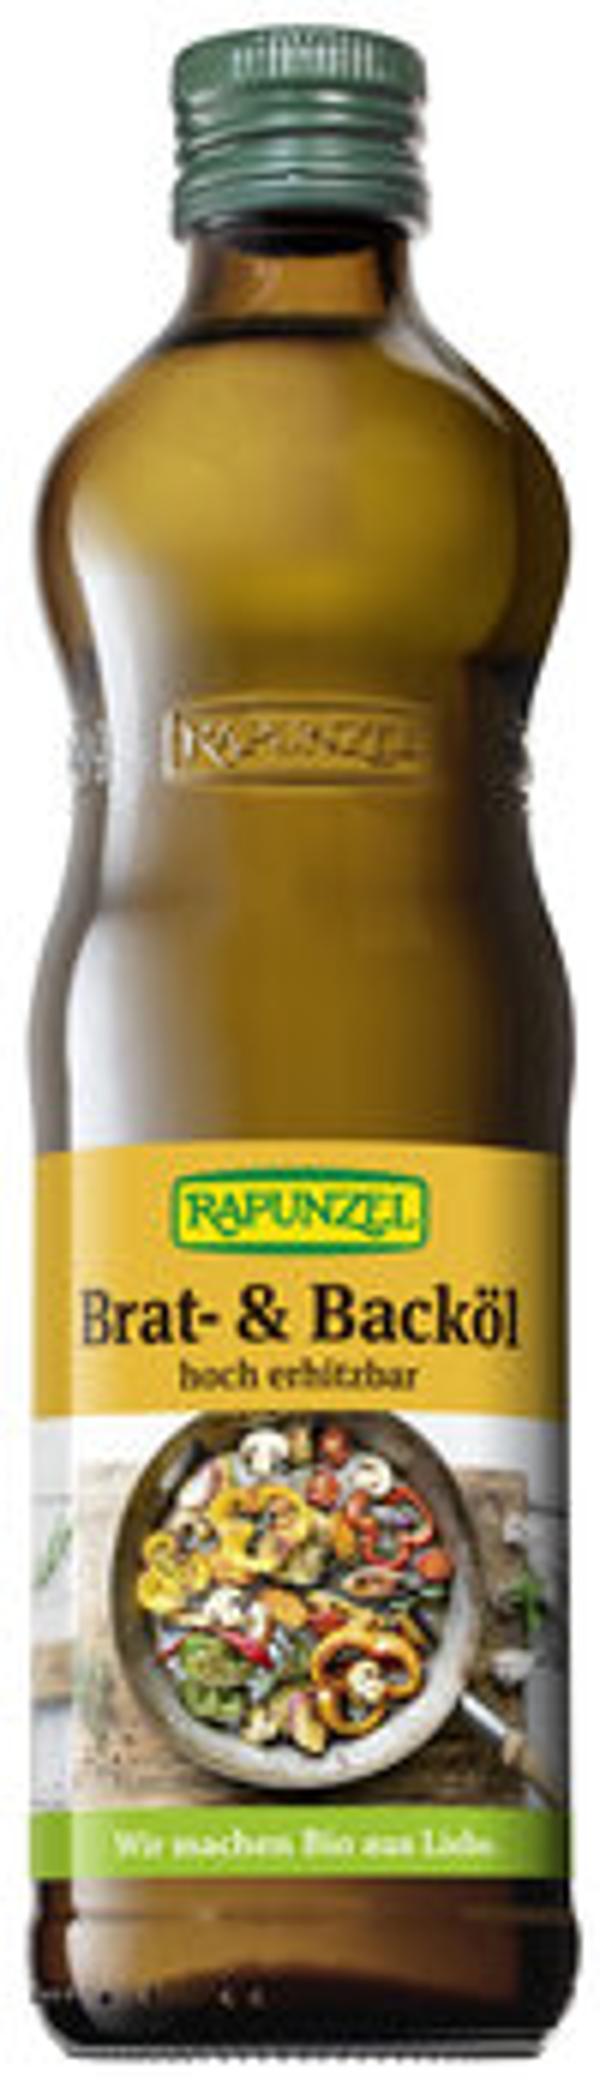 Produktfoto zu Rapunzel Brat- & Backöl 500ml